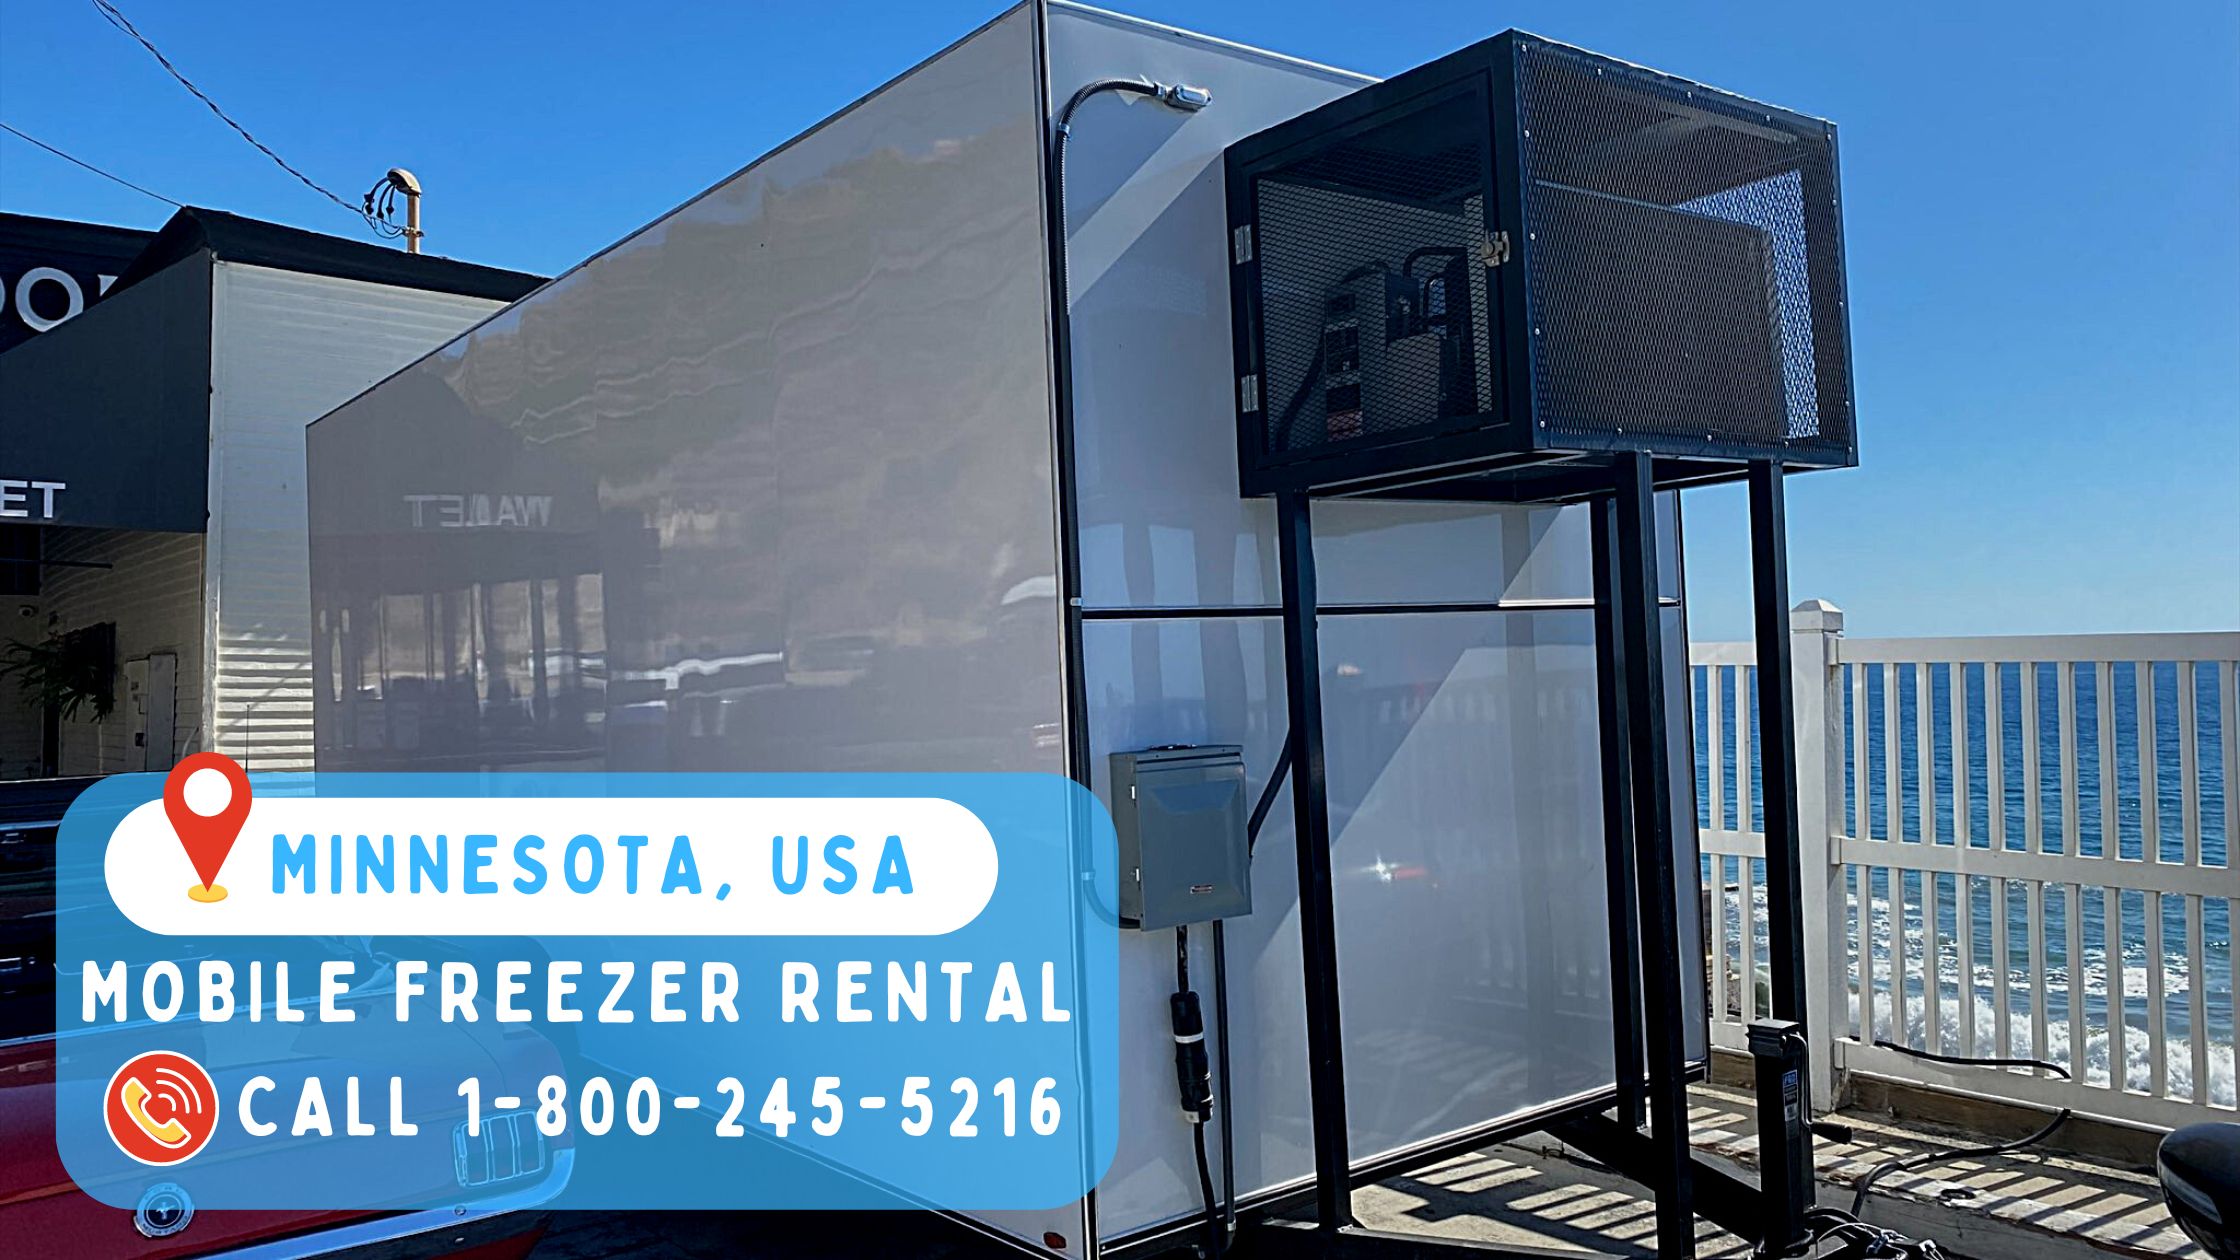 Mobile freezer rental in Minnesota